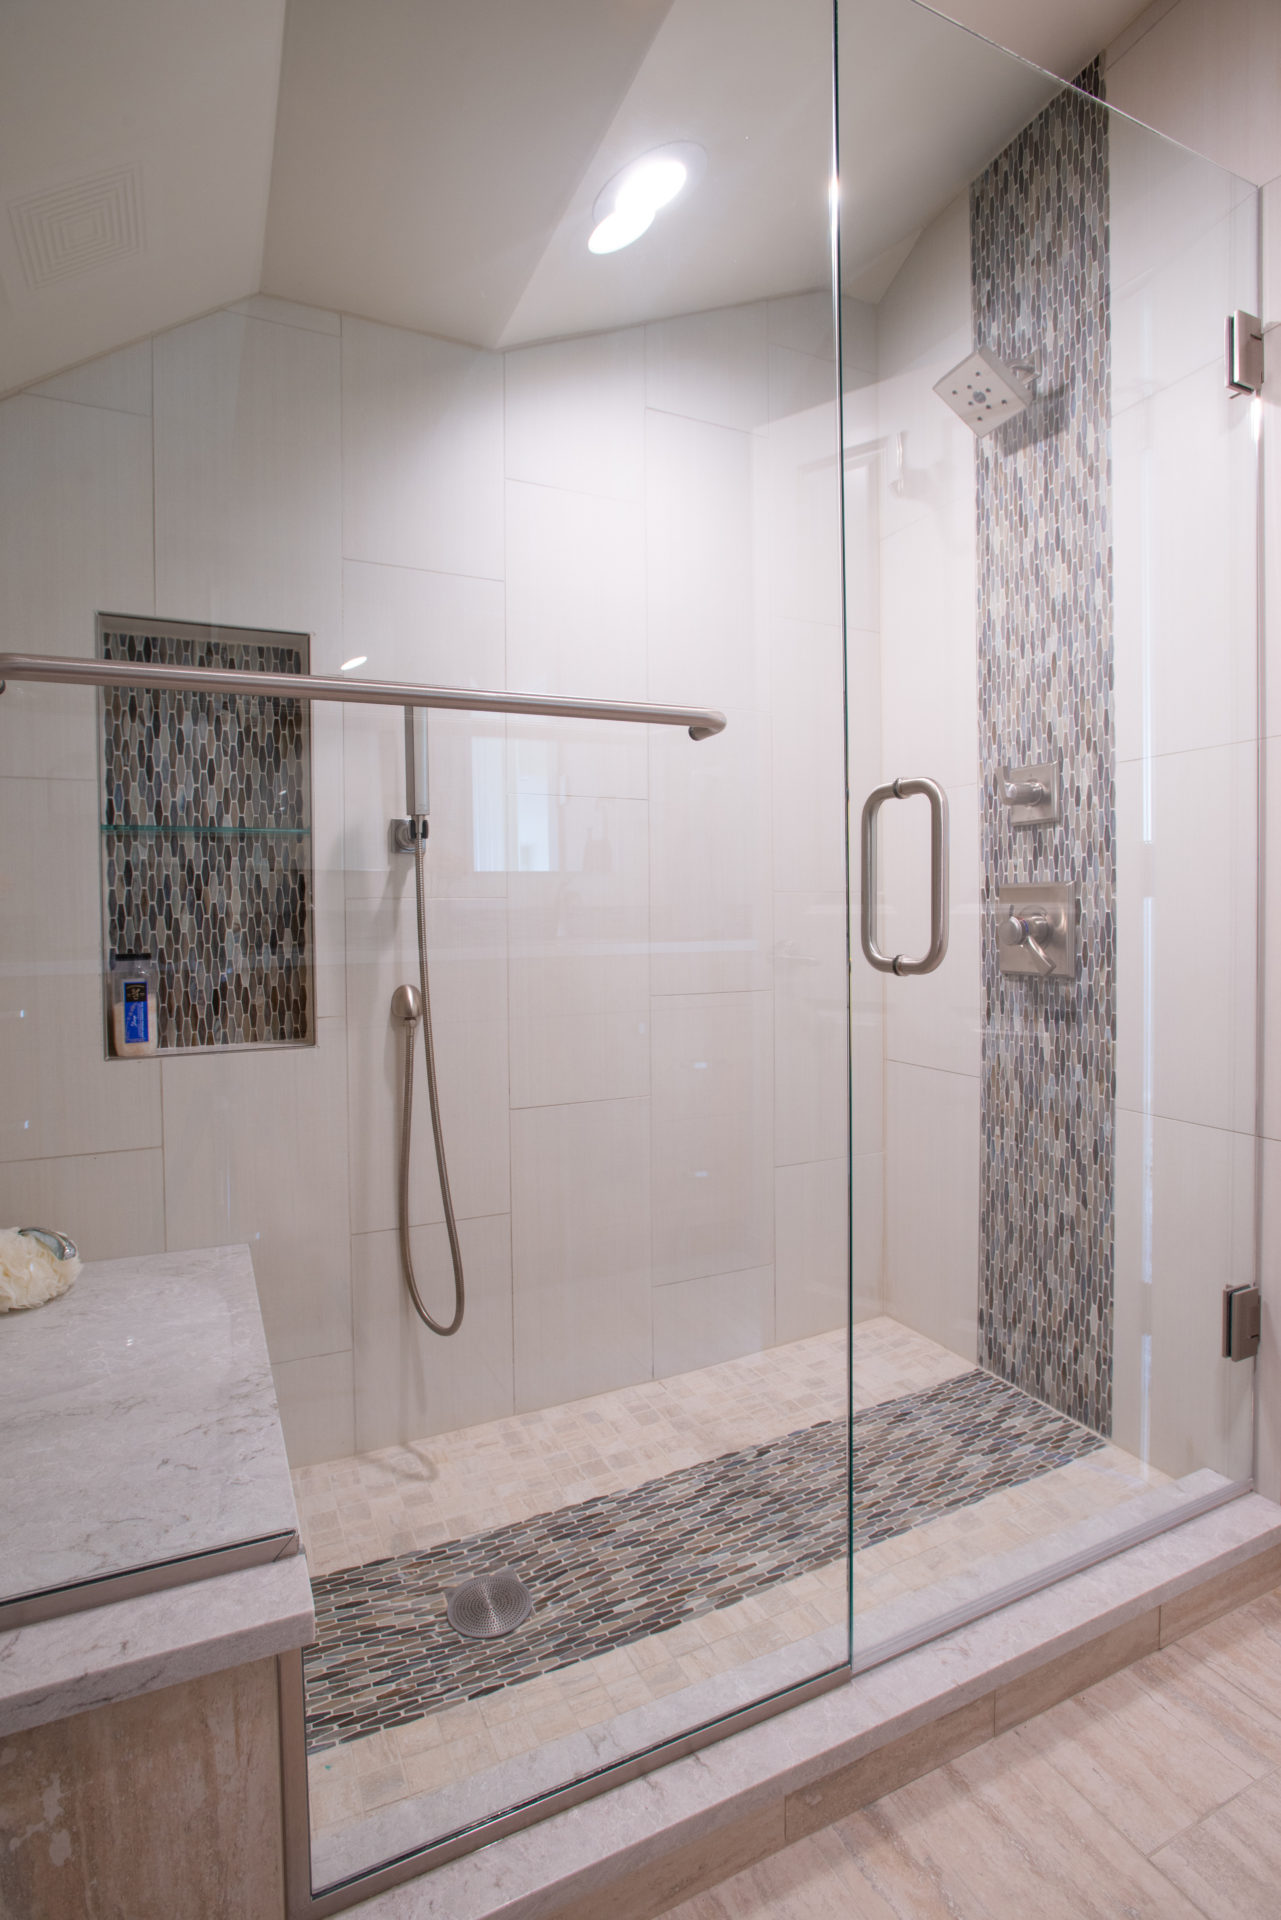 Mistakes in shower design